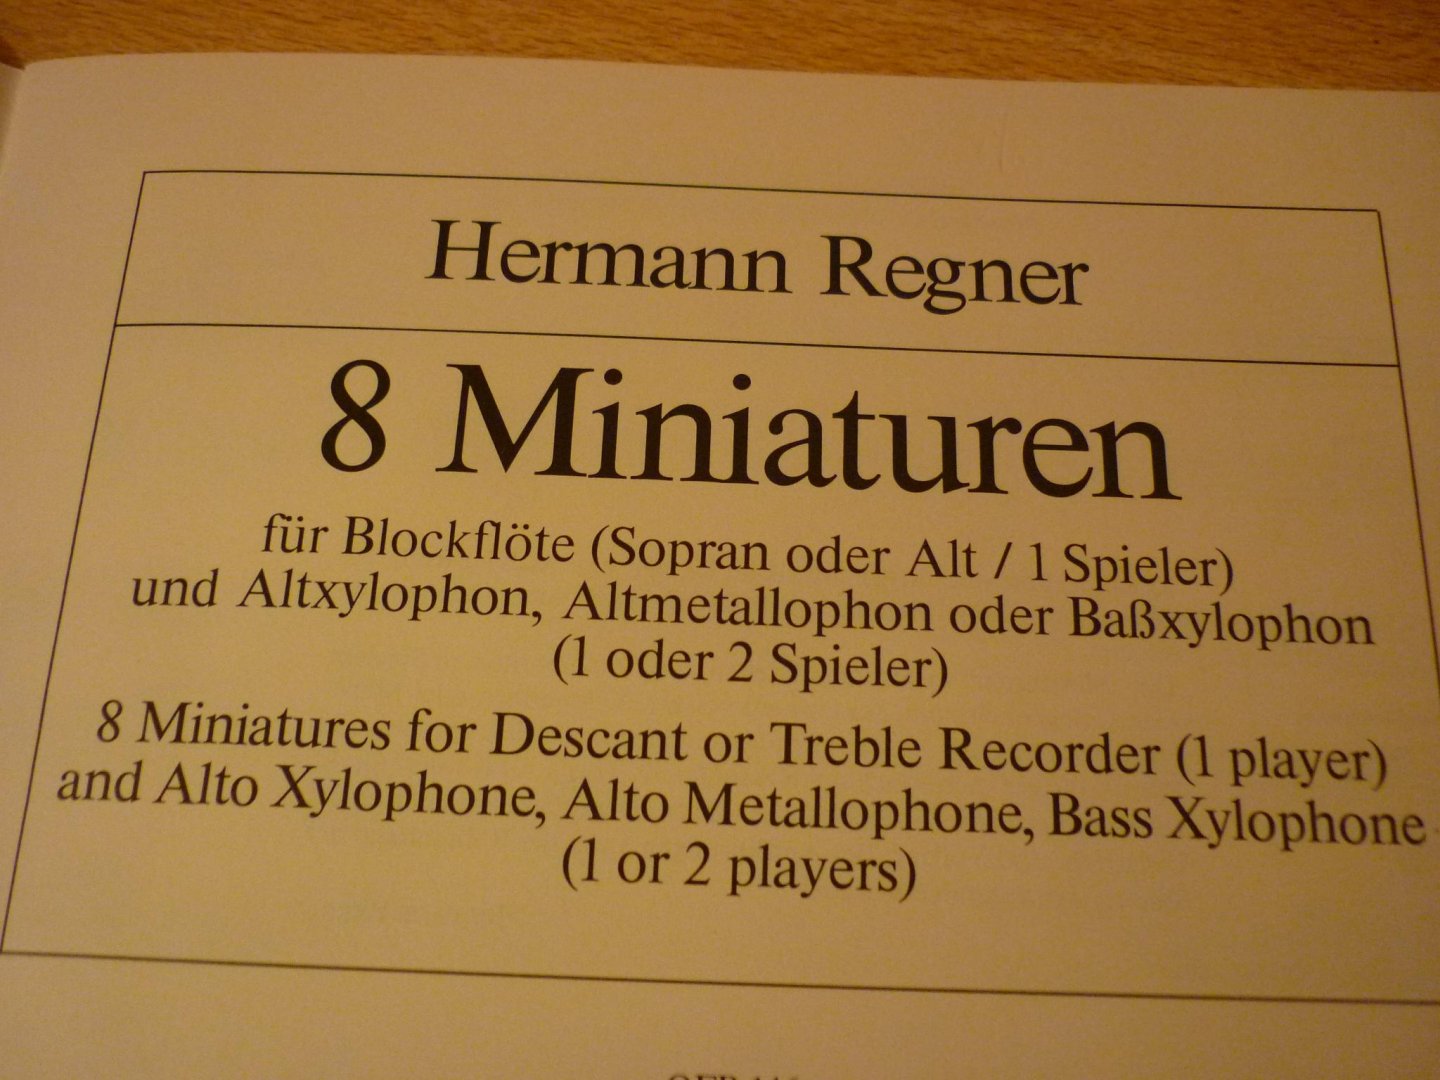 Regner; Hermann - 8 Miniaturen fur Blockflote (Soprano- or treble recorder and Orff-instruments - advanced)